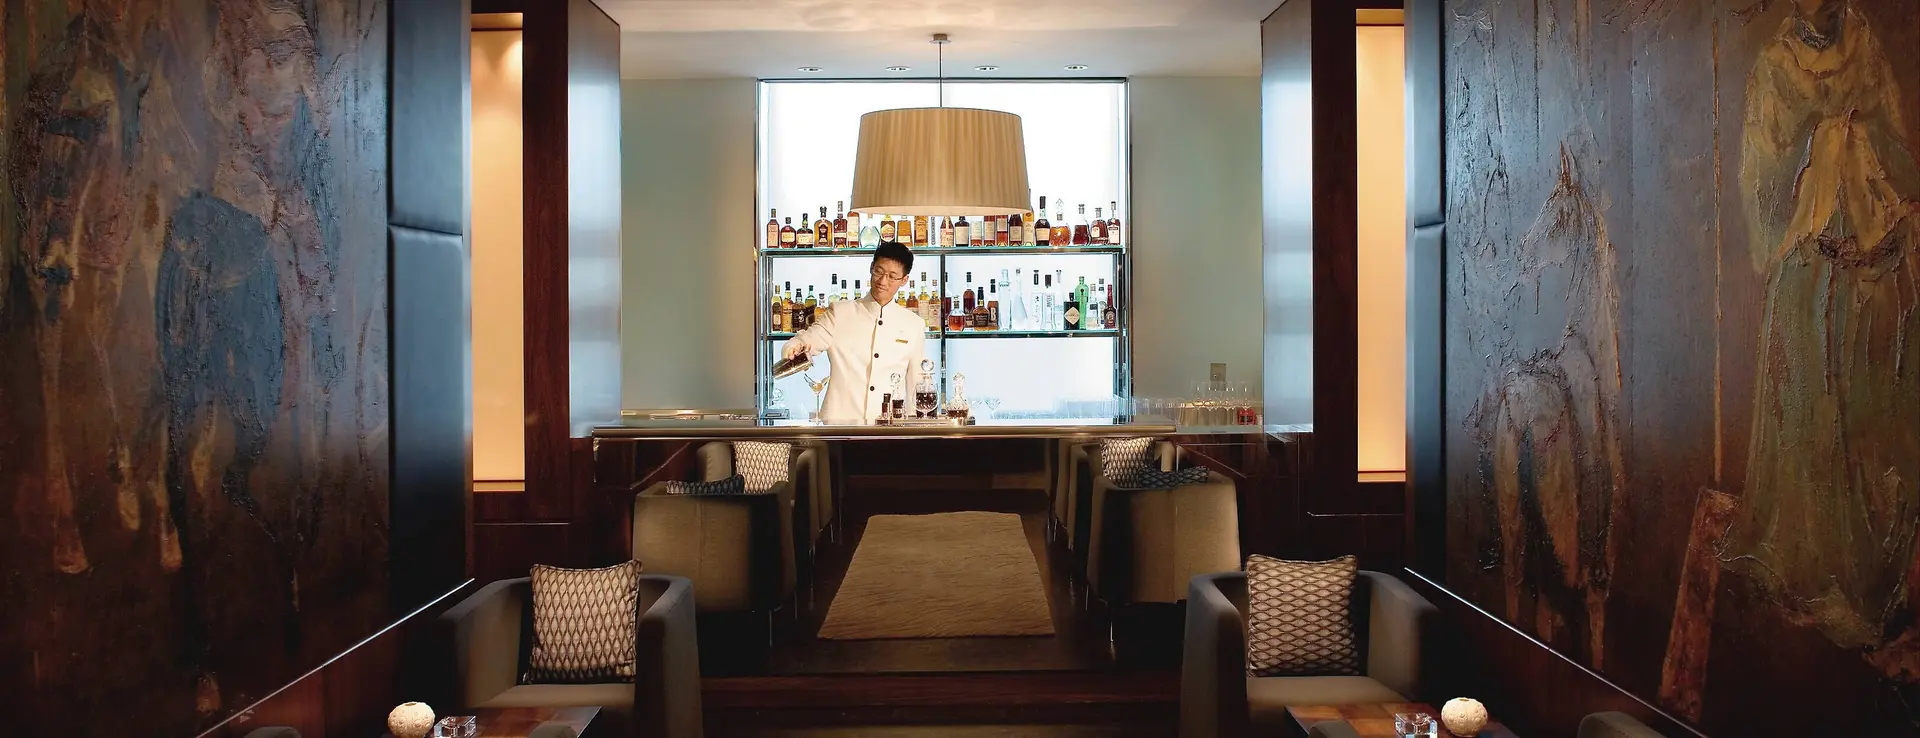 Hotel review Restaurants & Bars' - Mandarin Oriental Hong Kong - 5